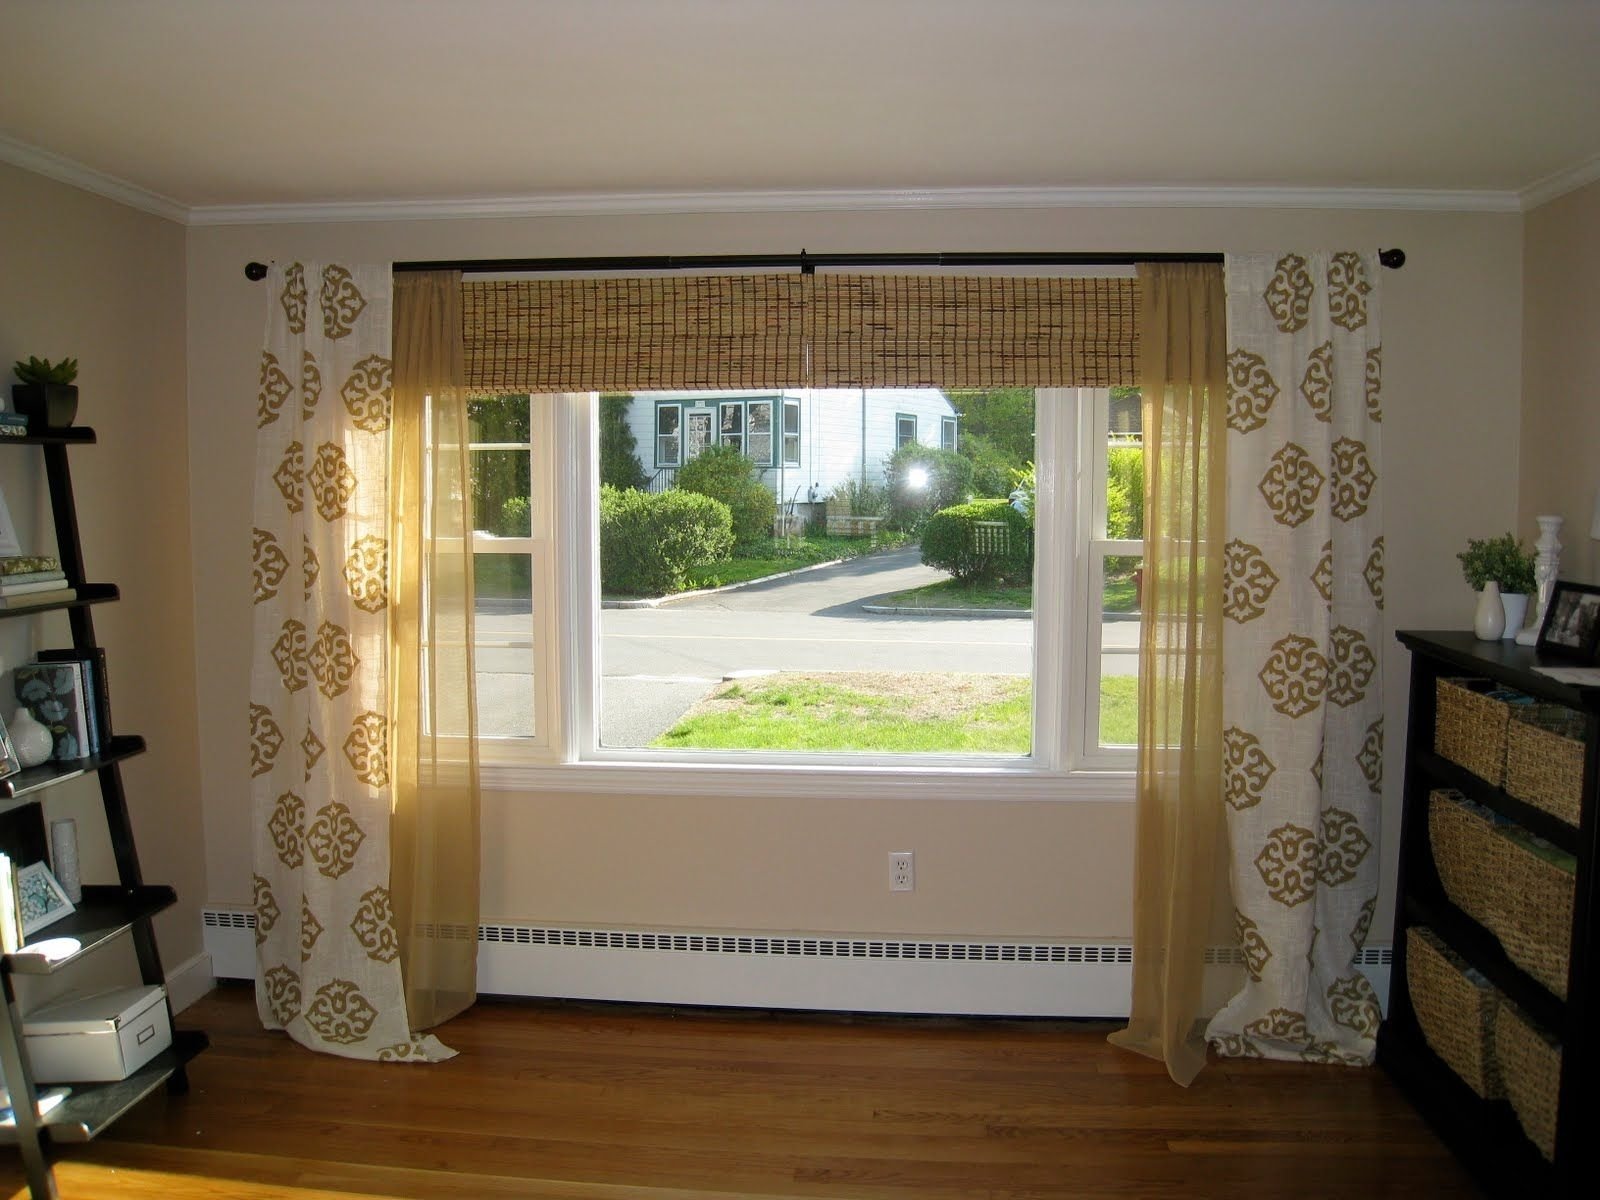 10 Unique Curtain Ideas For Big Windows window ideas for living room curtains round 3 windows 5 2022